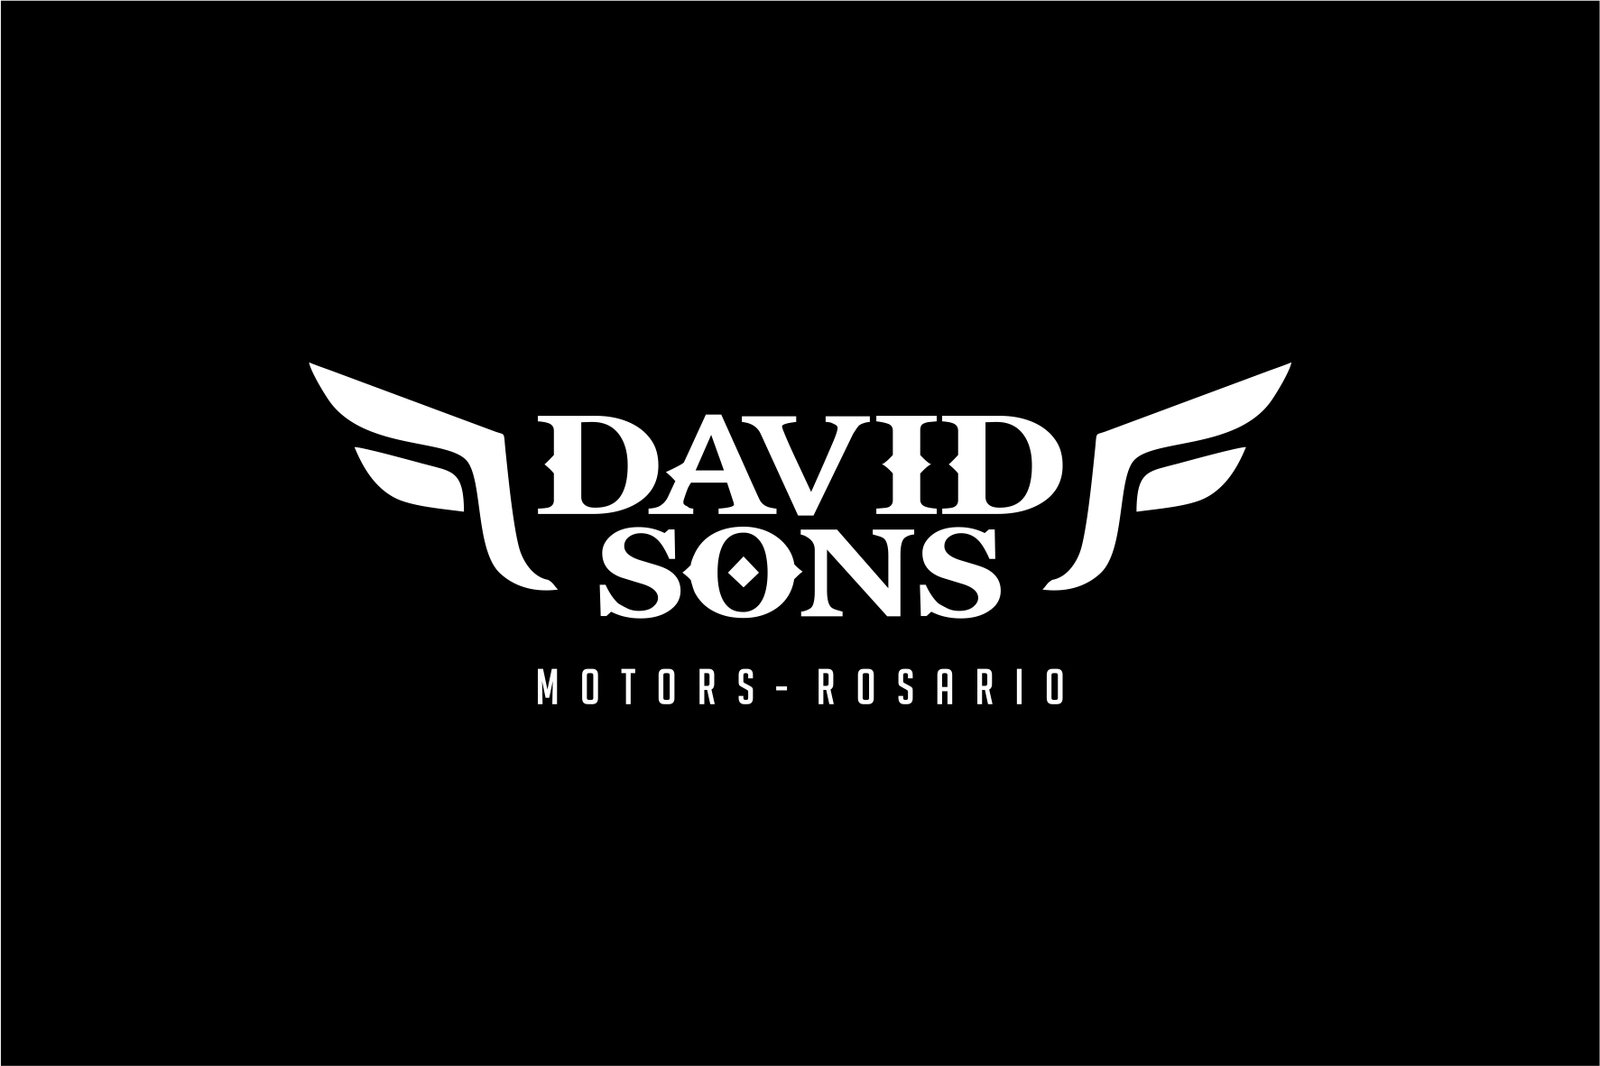 DAVID SONS MOTORS ROSARIO